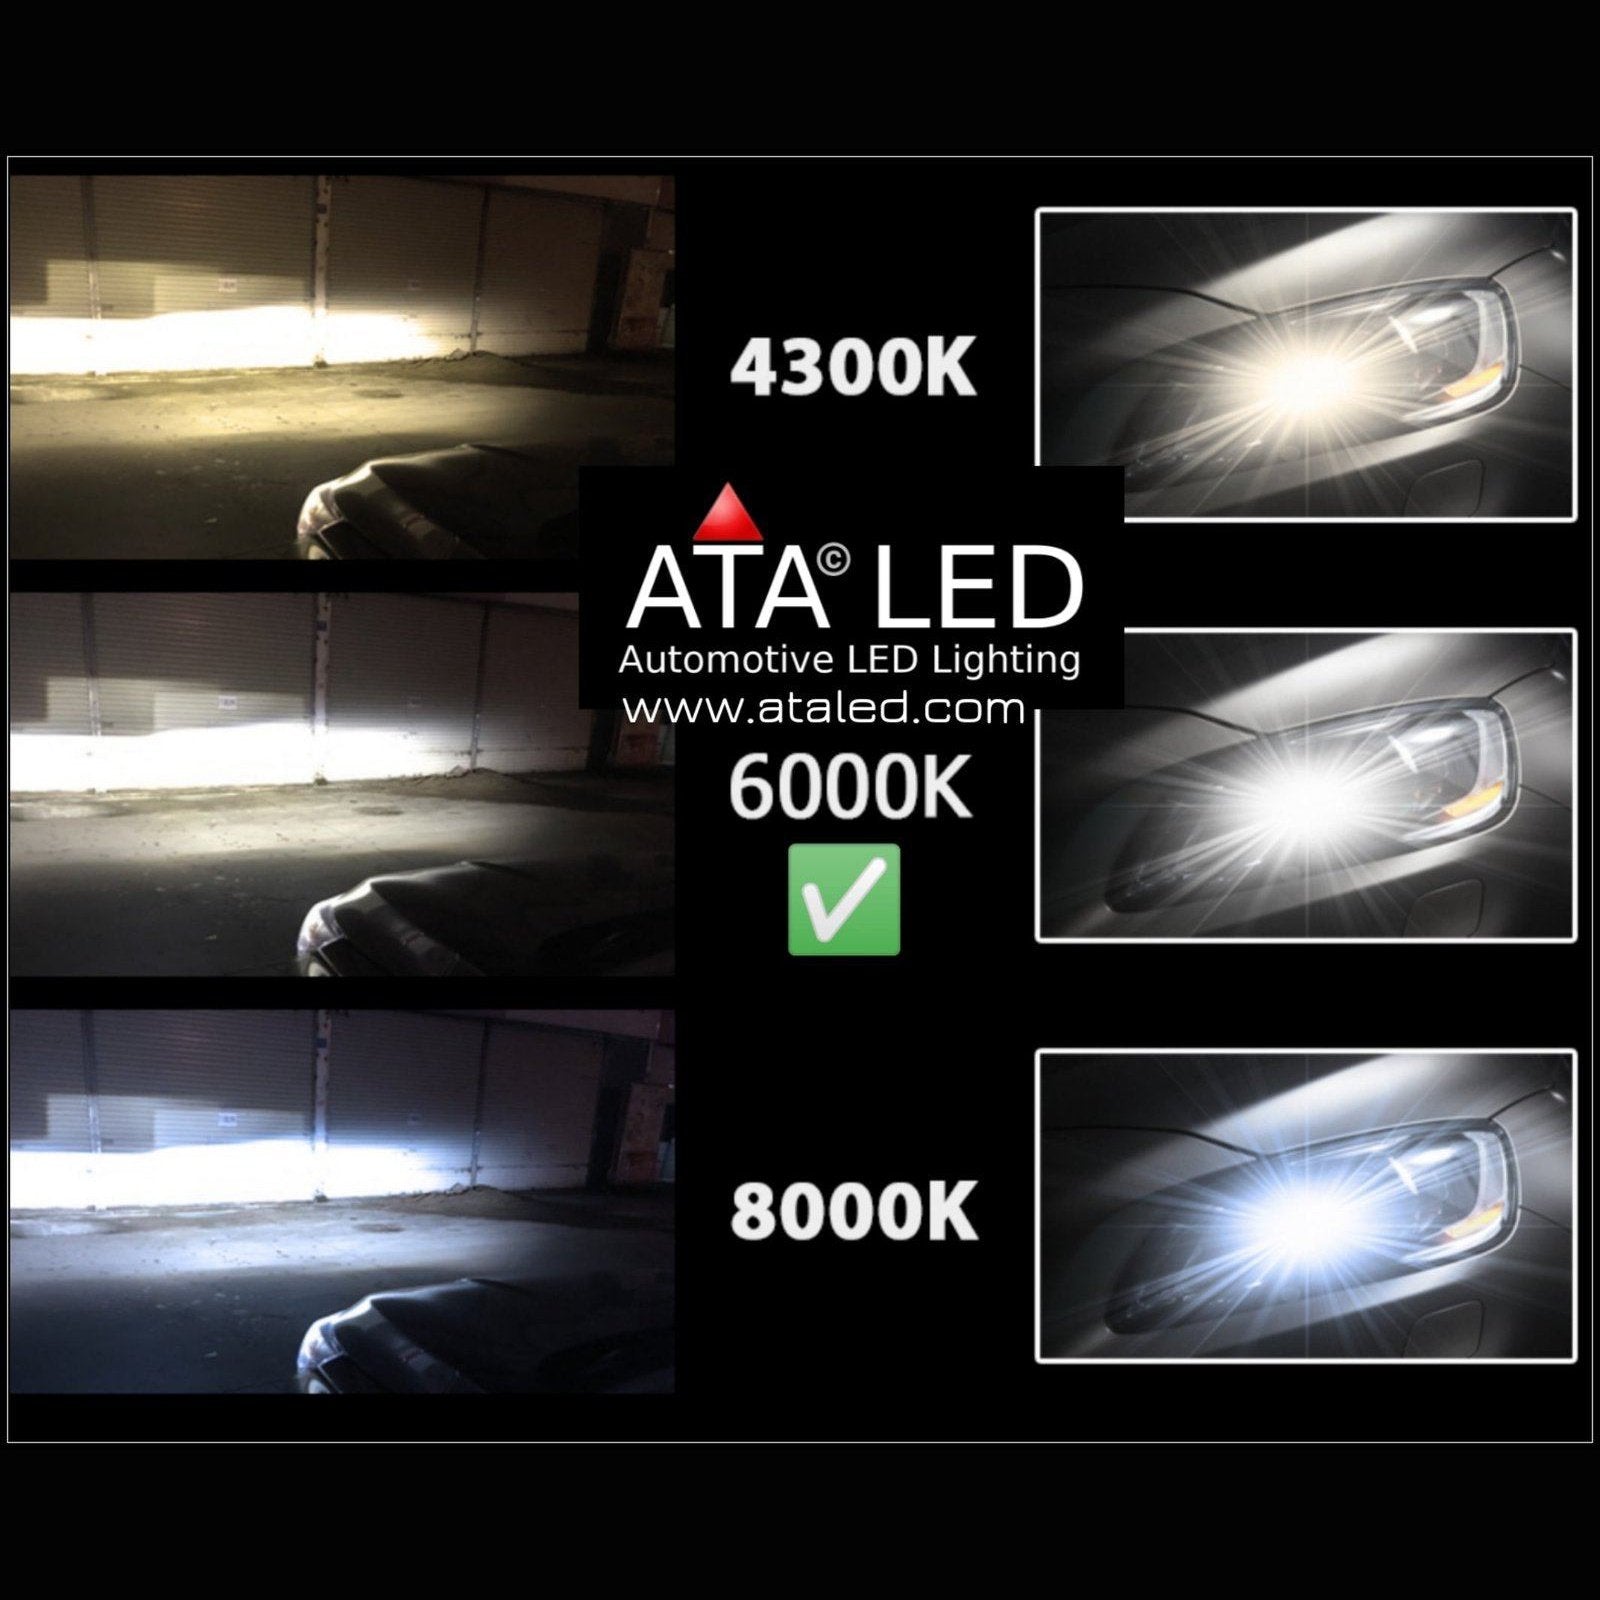 9007/HB5 - 25,000 Lúmens - (1 Set) 2 x ATALED Headlight bulbs - 6000k Pure White Color